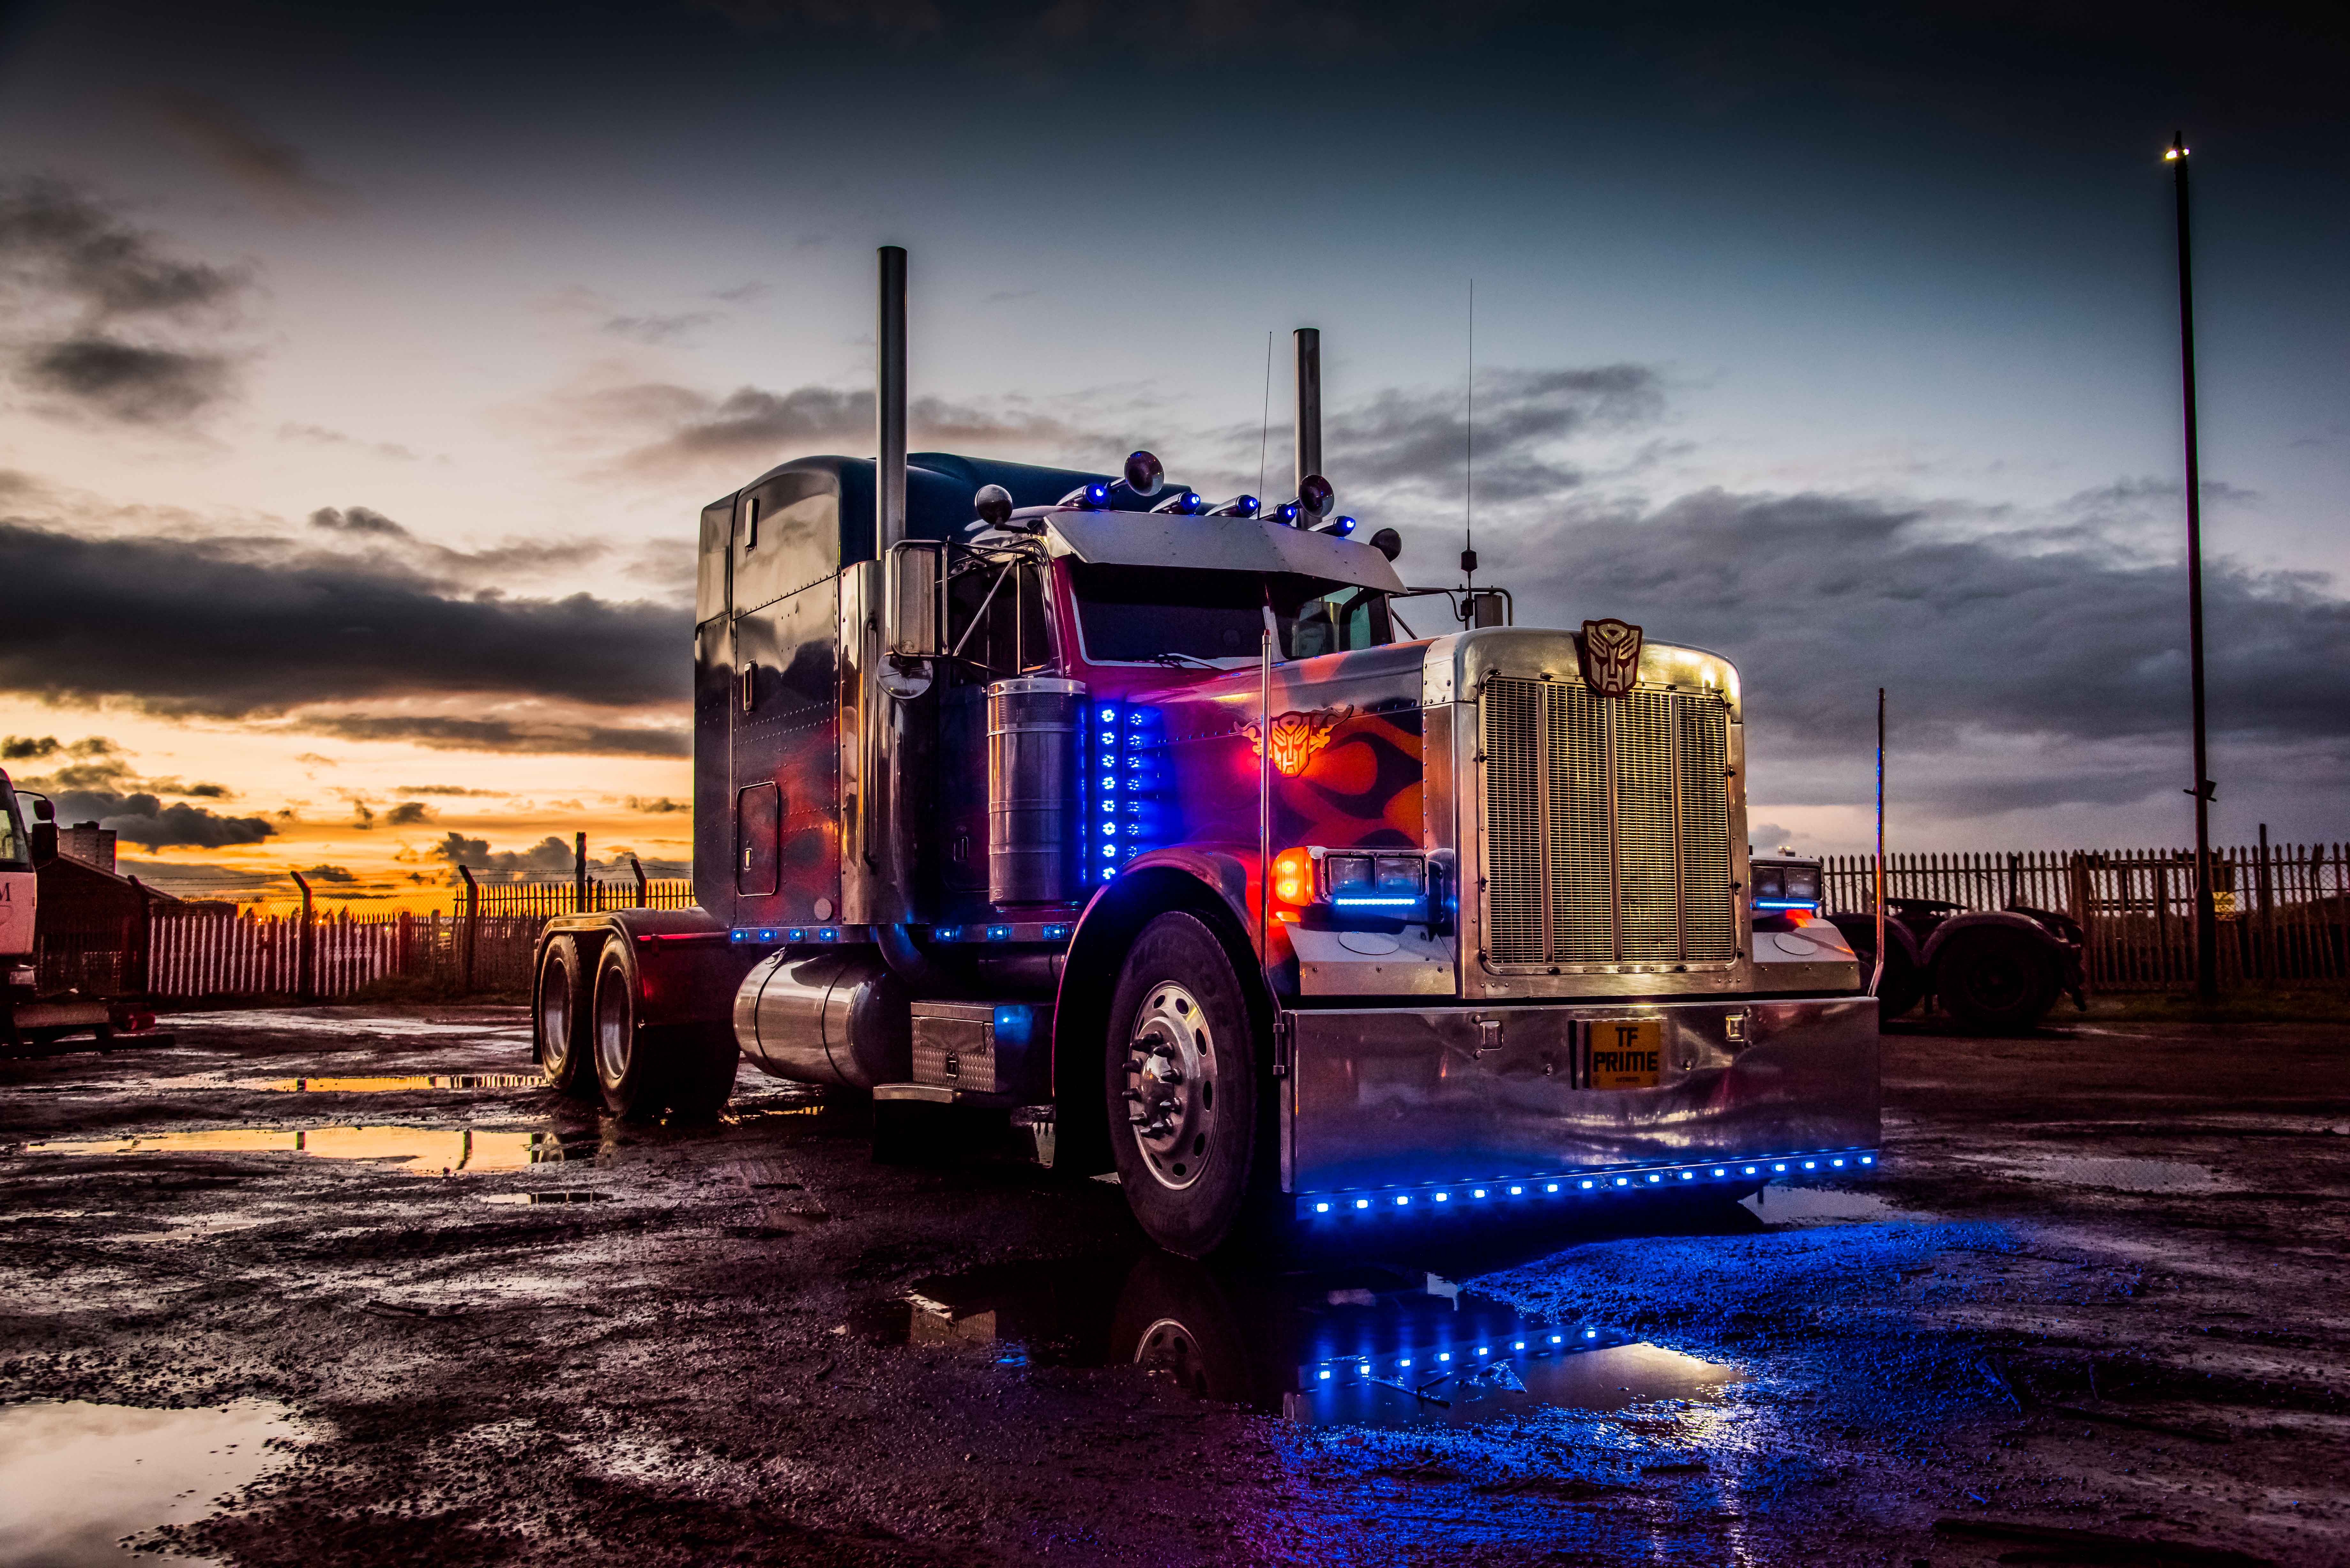 KIdtropolis Optimus Prime Truck photo DSC_5535